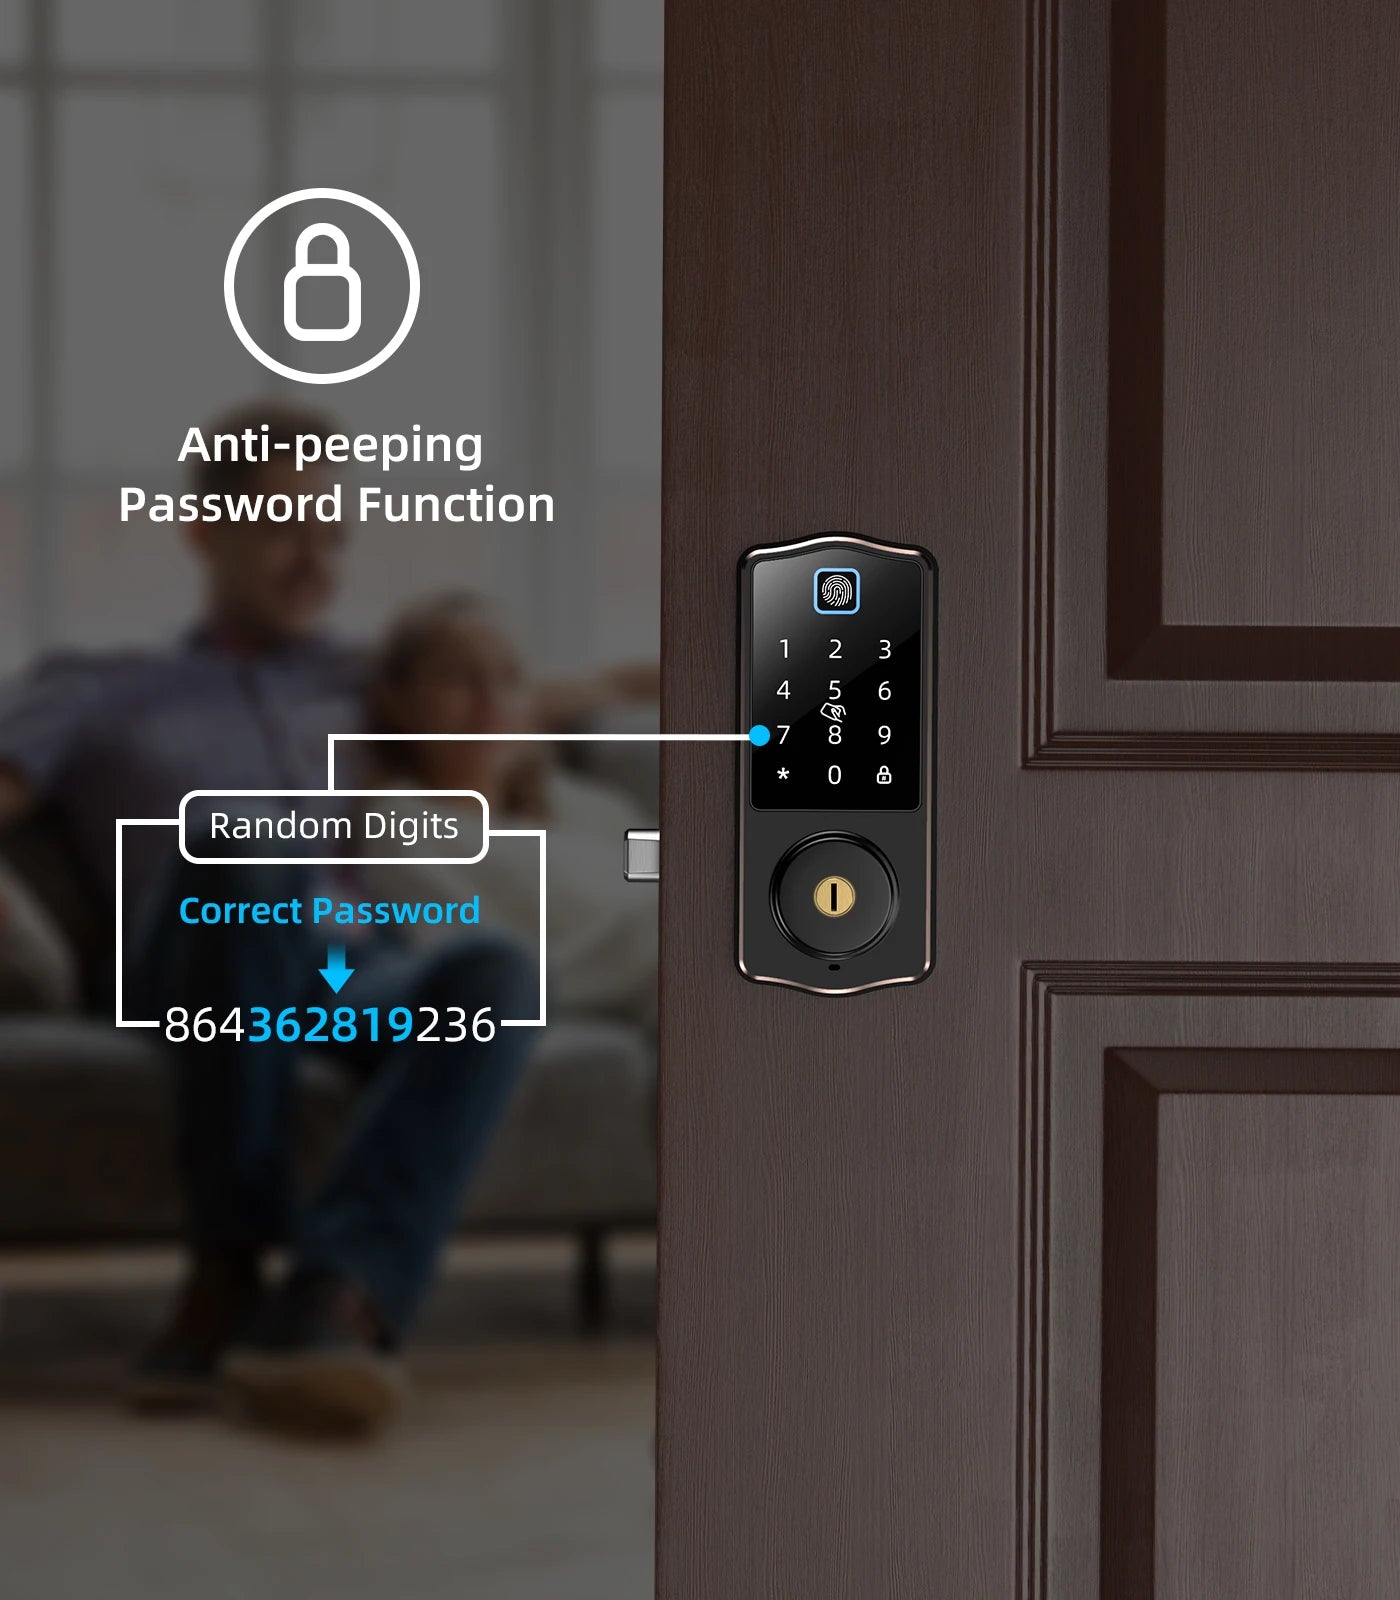 Hot Selling Smartphone Biometric Remote Control Smart Locks Fingerprint Digital Intelligent Code Card Key Smart Door Lock